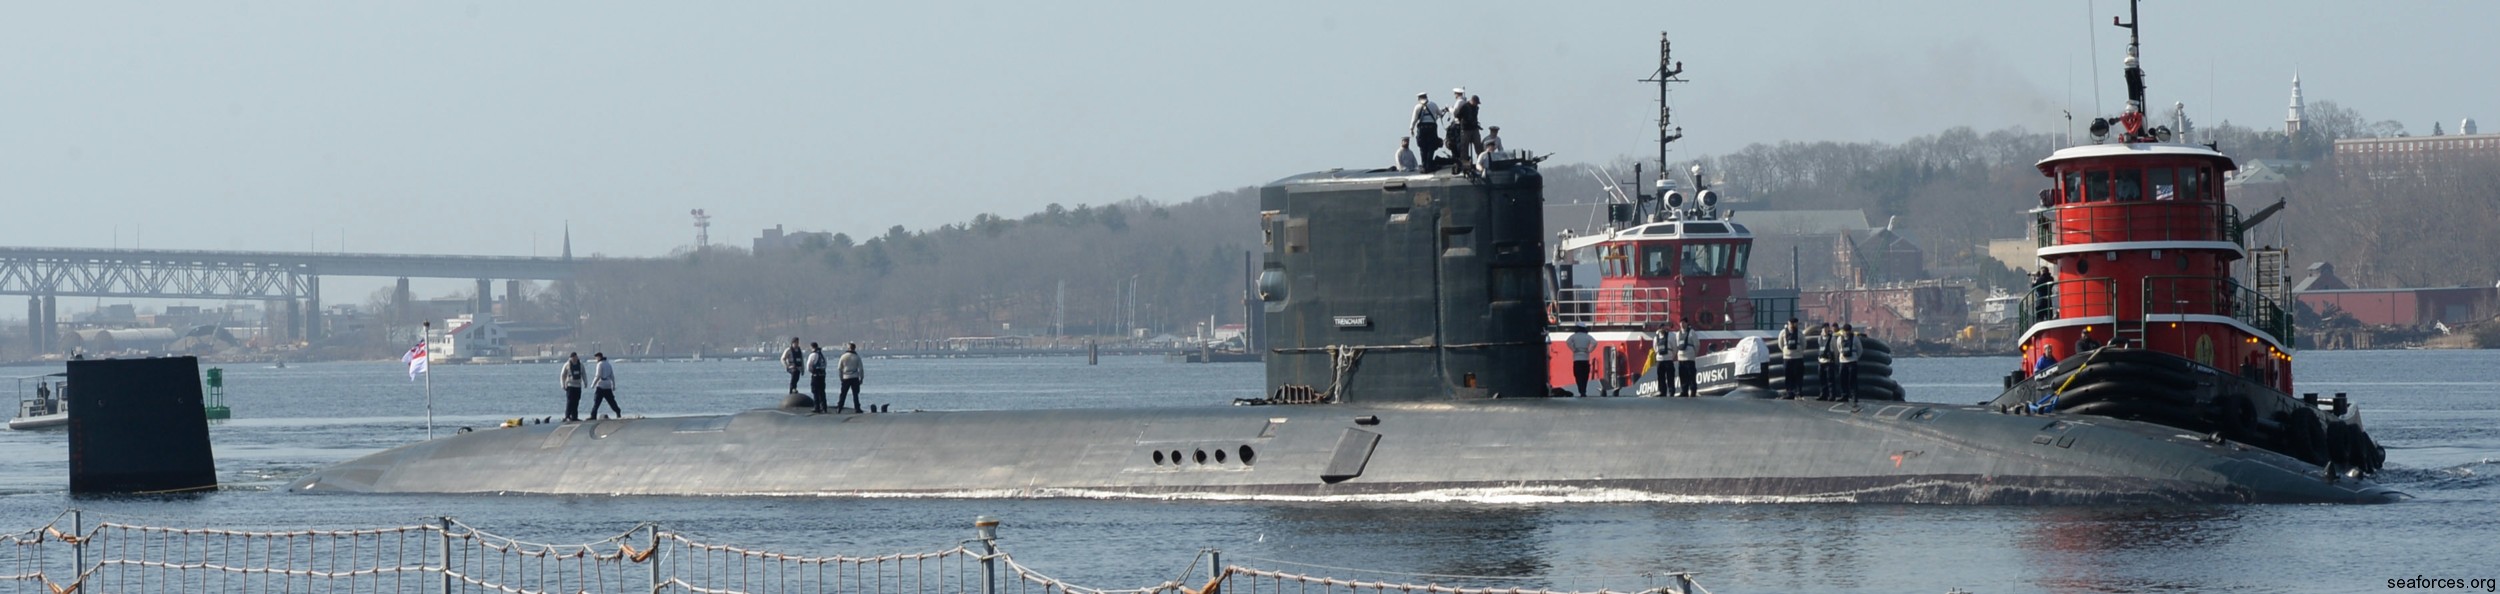 s91 hms trenchant trafalgar class attack submarine hunter killer royal navy 11